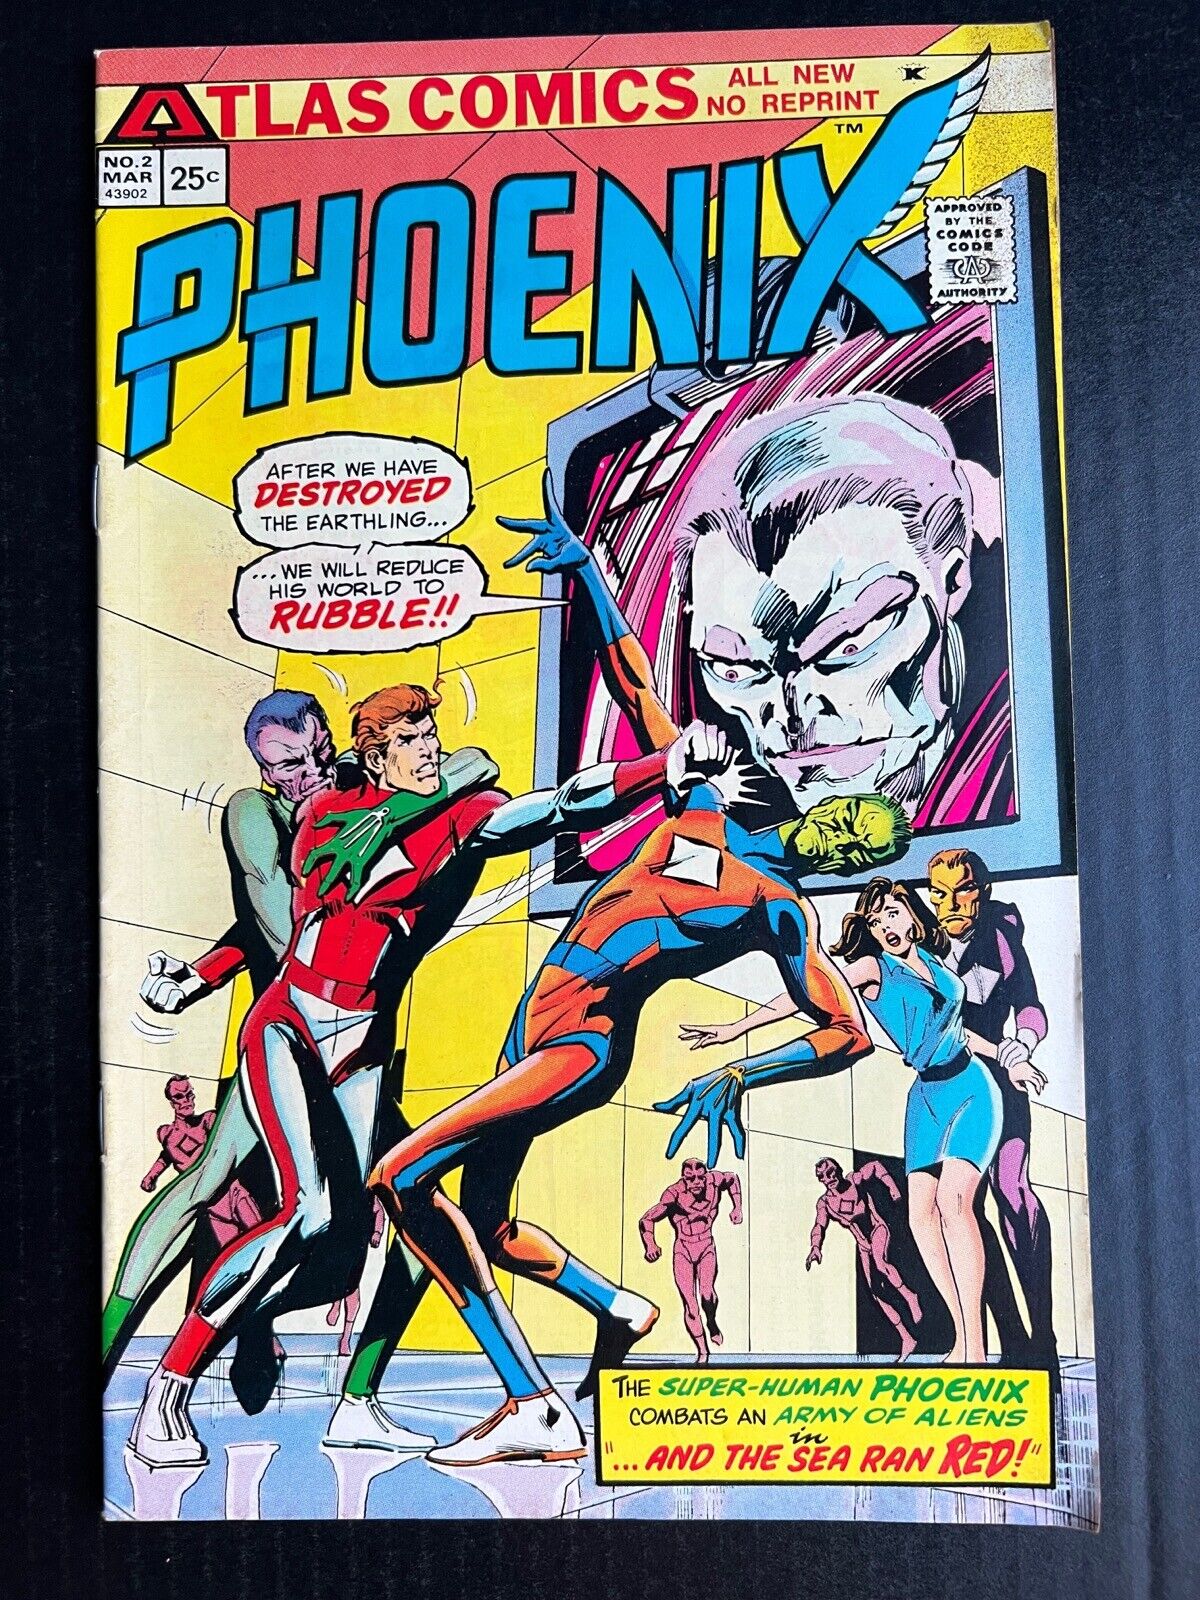 The PHOENIX #2 March 1975 Unread Vintage Atlas Comics